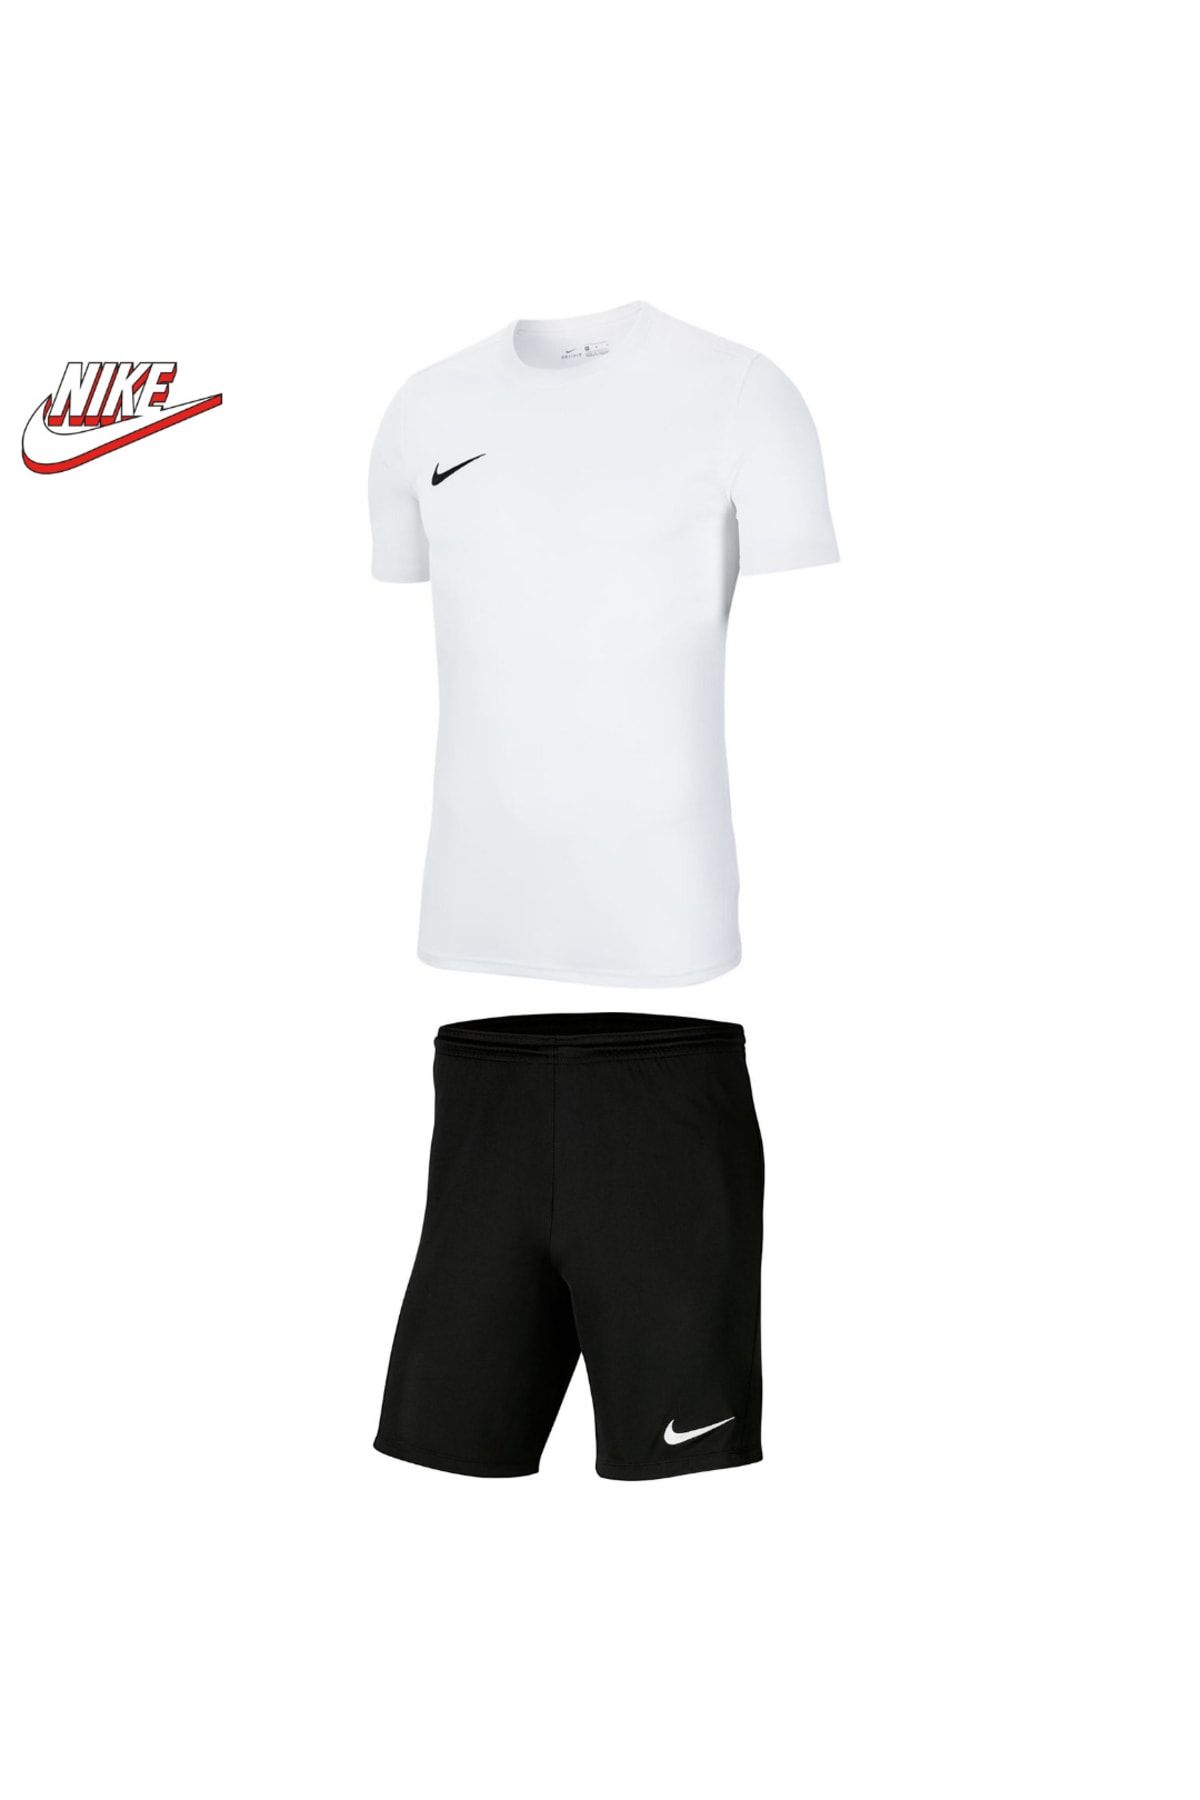 Nike Dry Park Vıı Erkek Tişört+ Şort Bv6708-100 Bv6885-010